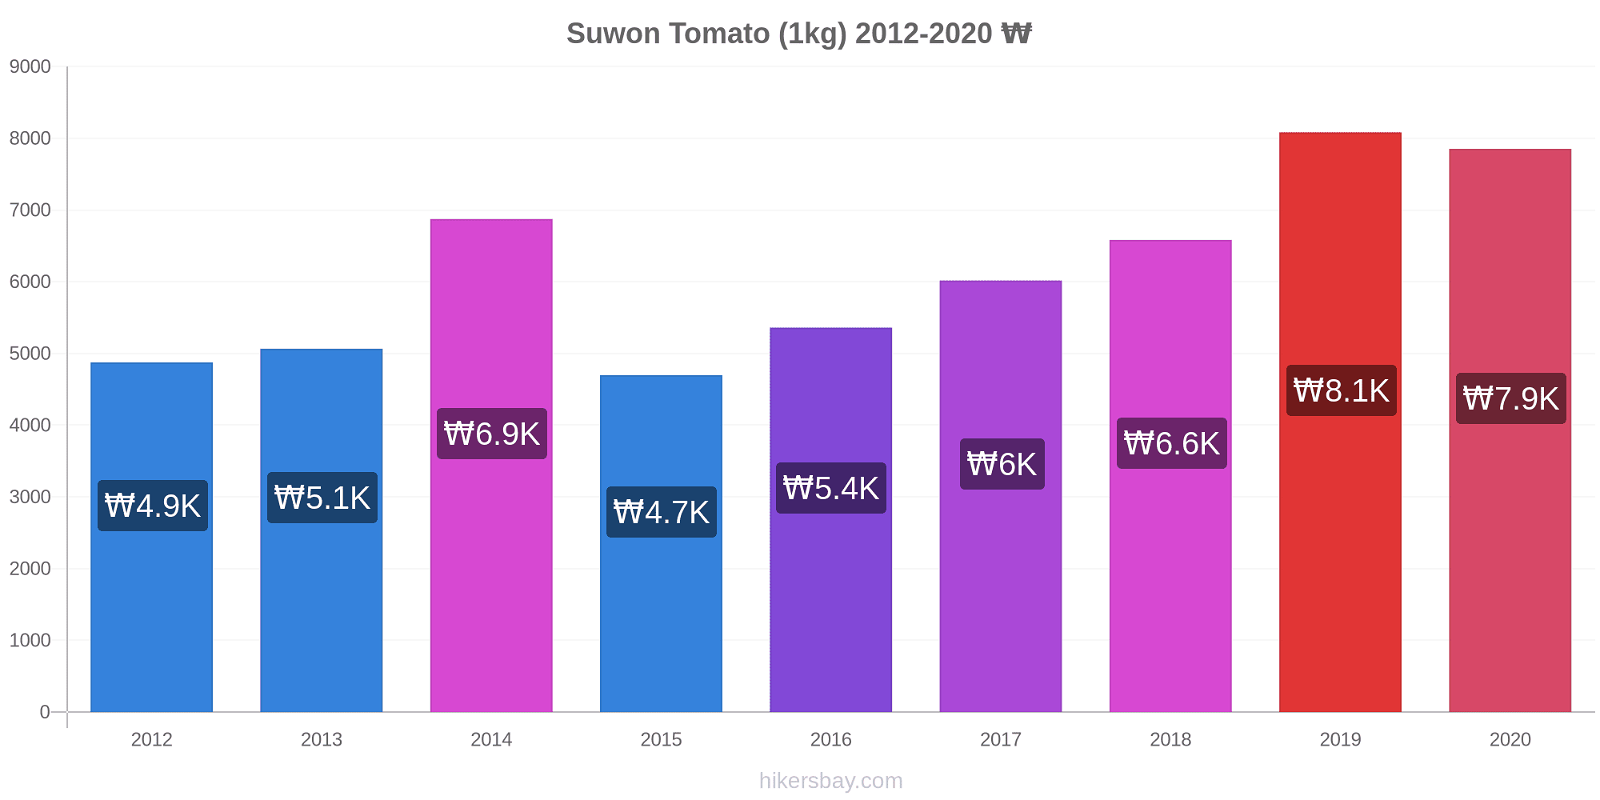 Suwon price changes Tomato (1kg) hikersbay.com